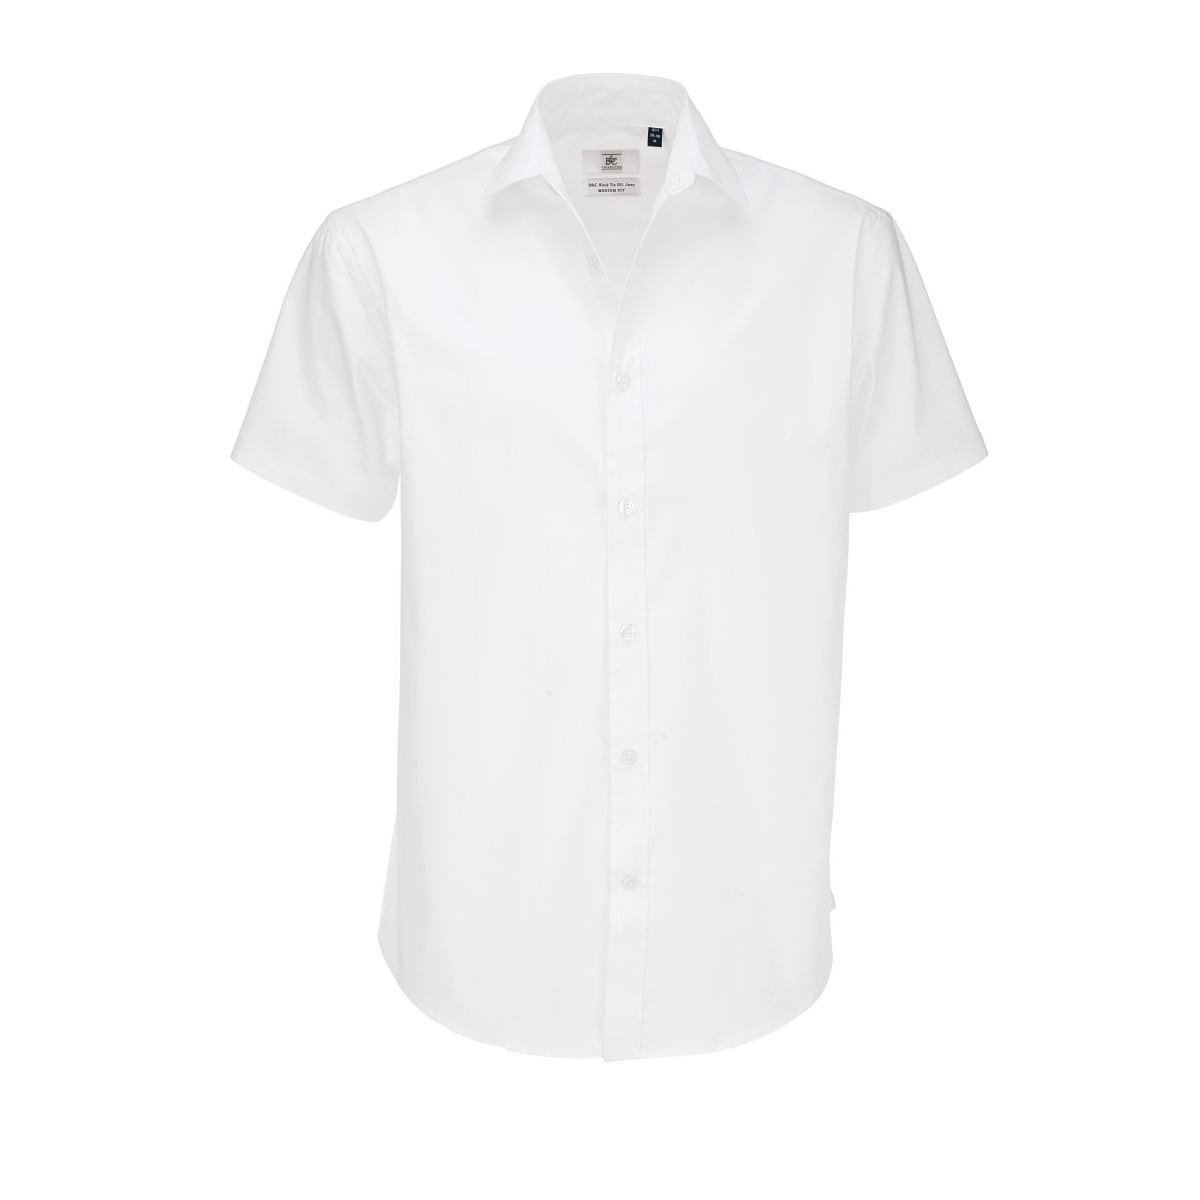 Pánská elastická popelínová košile B&C Black Tie s krátkým rukávem - bílá, XL